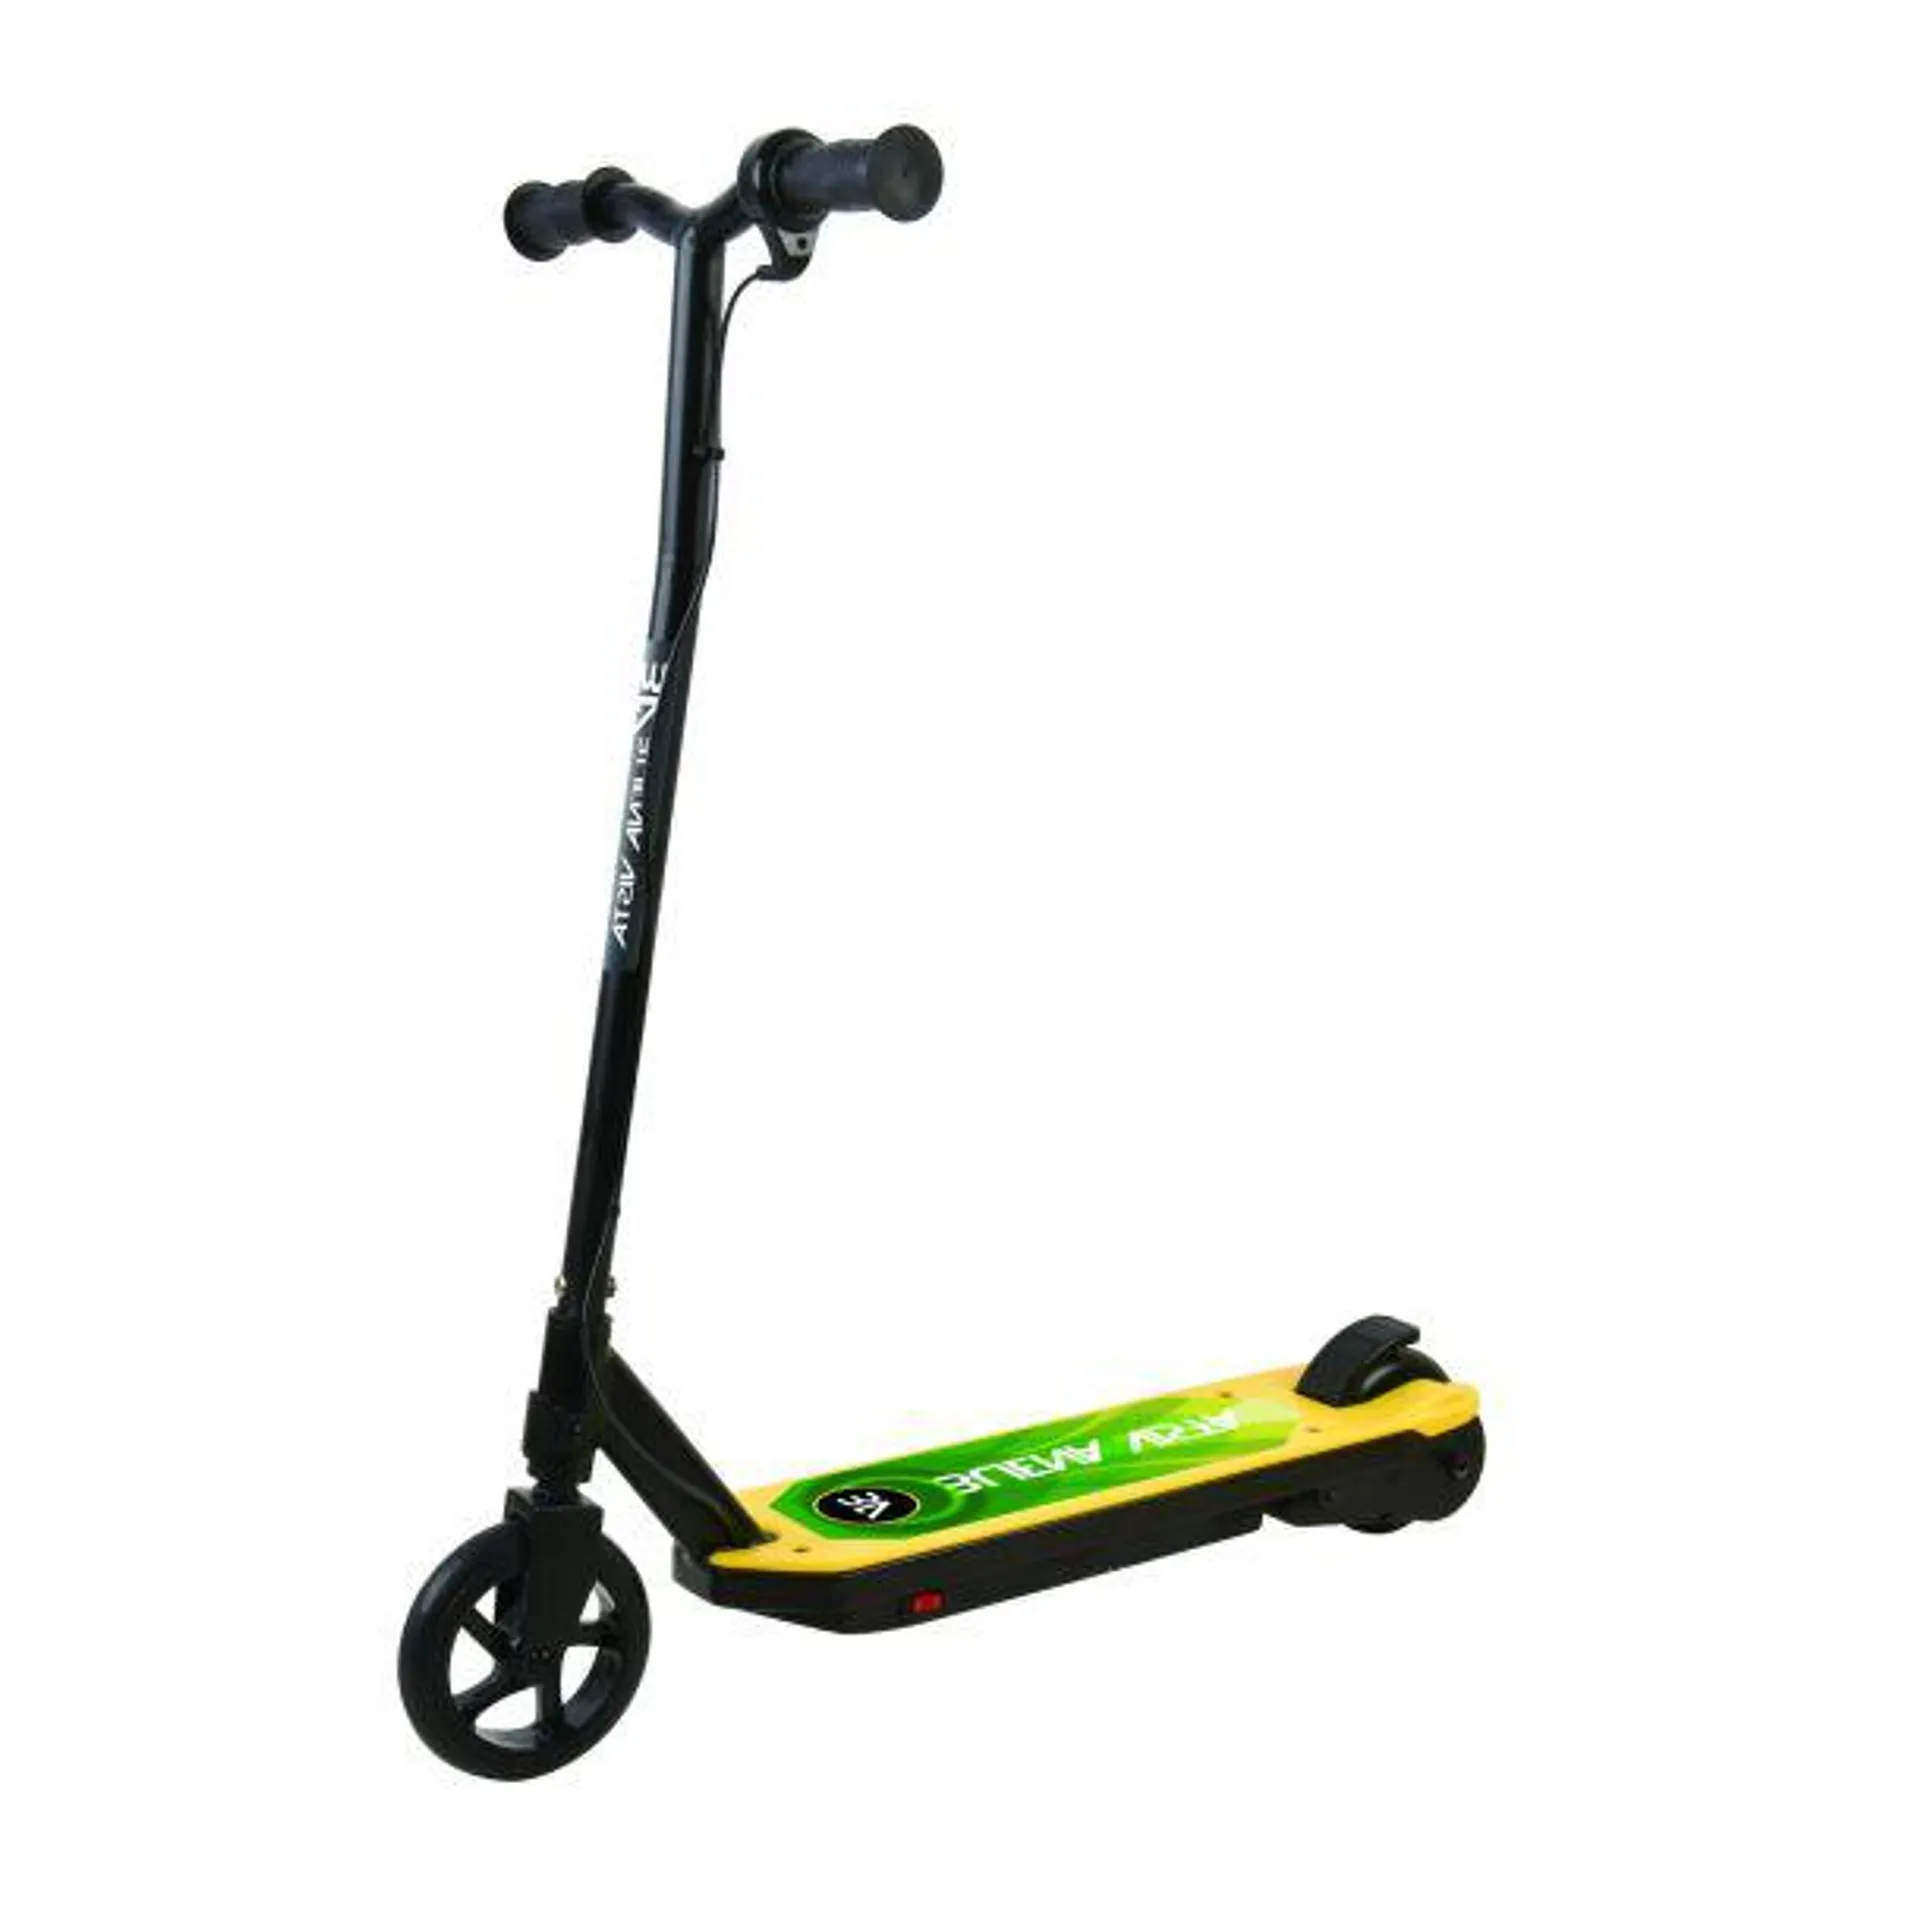 Buenavista 12V Electric Scooter - Black/Yellow